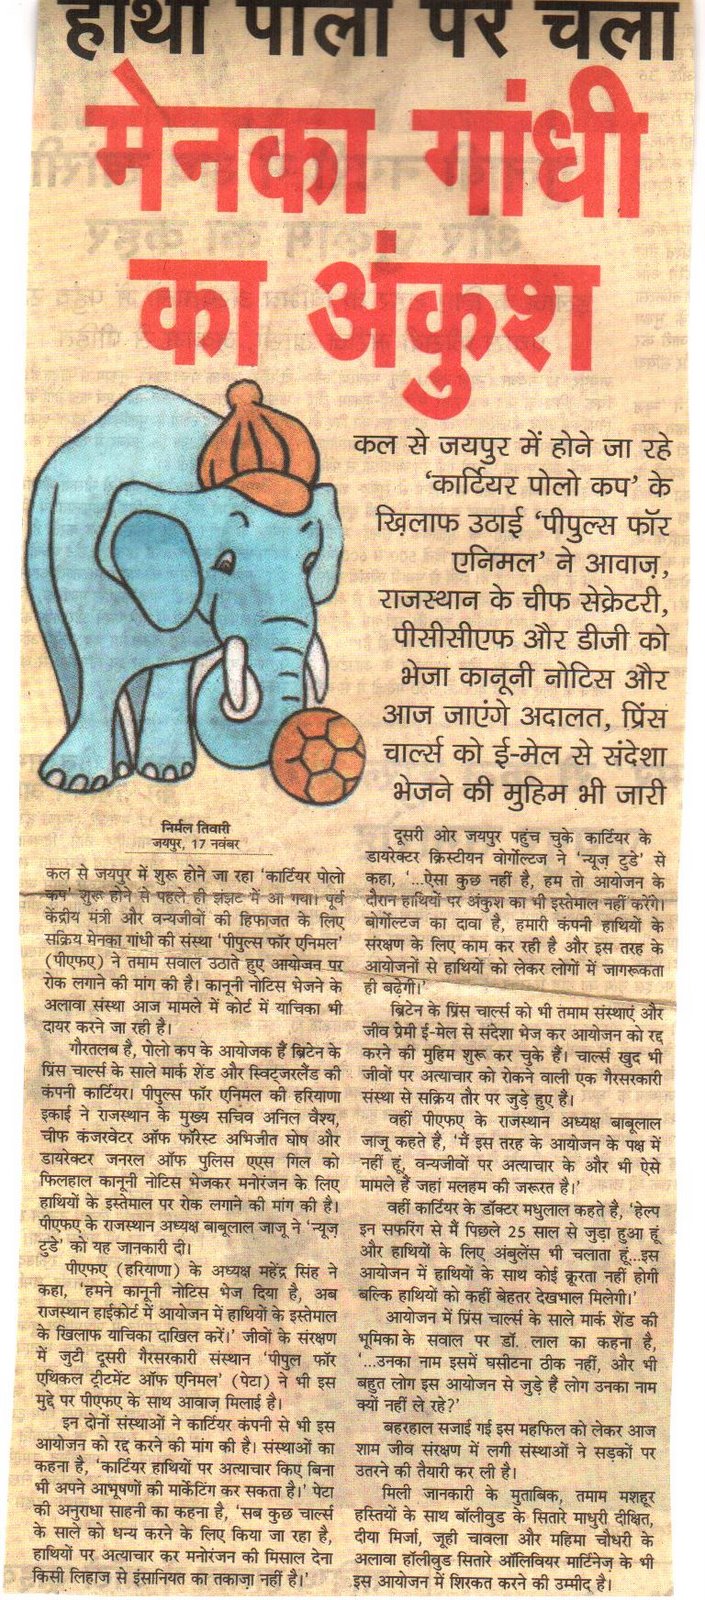 Naresh Kadyan opposed Elephant polo in India